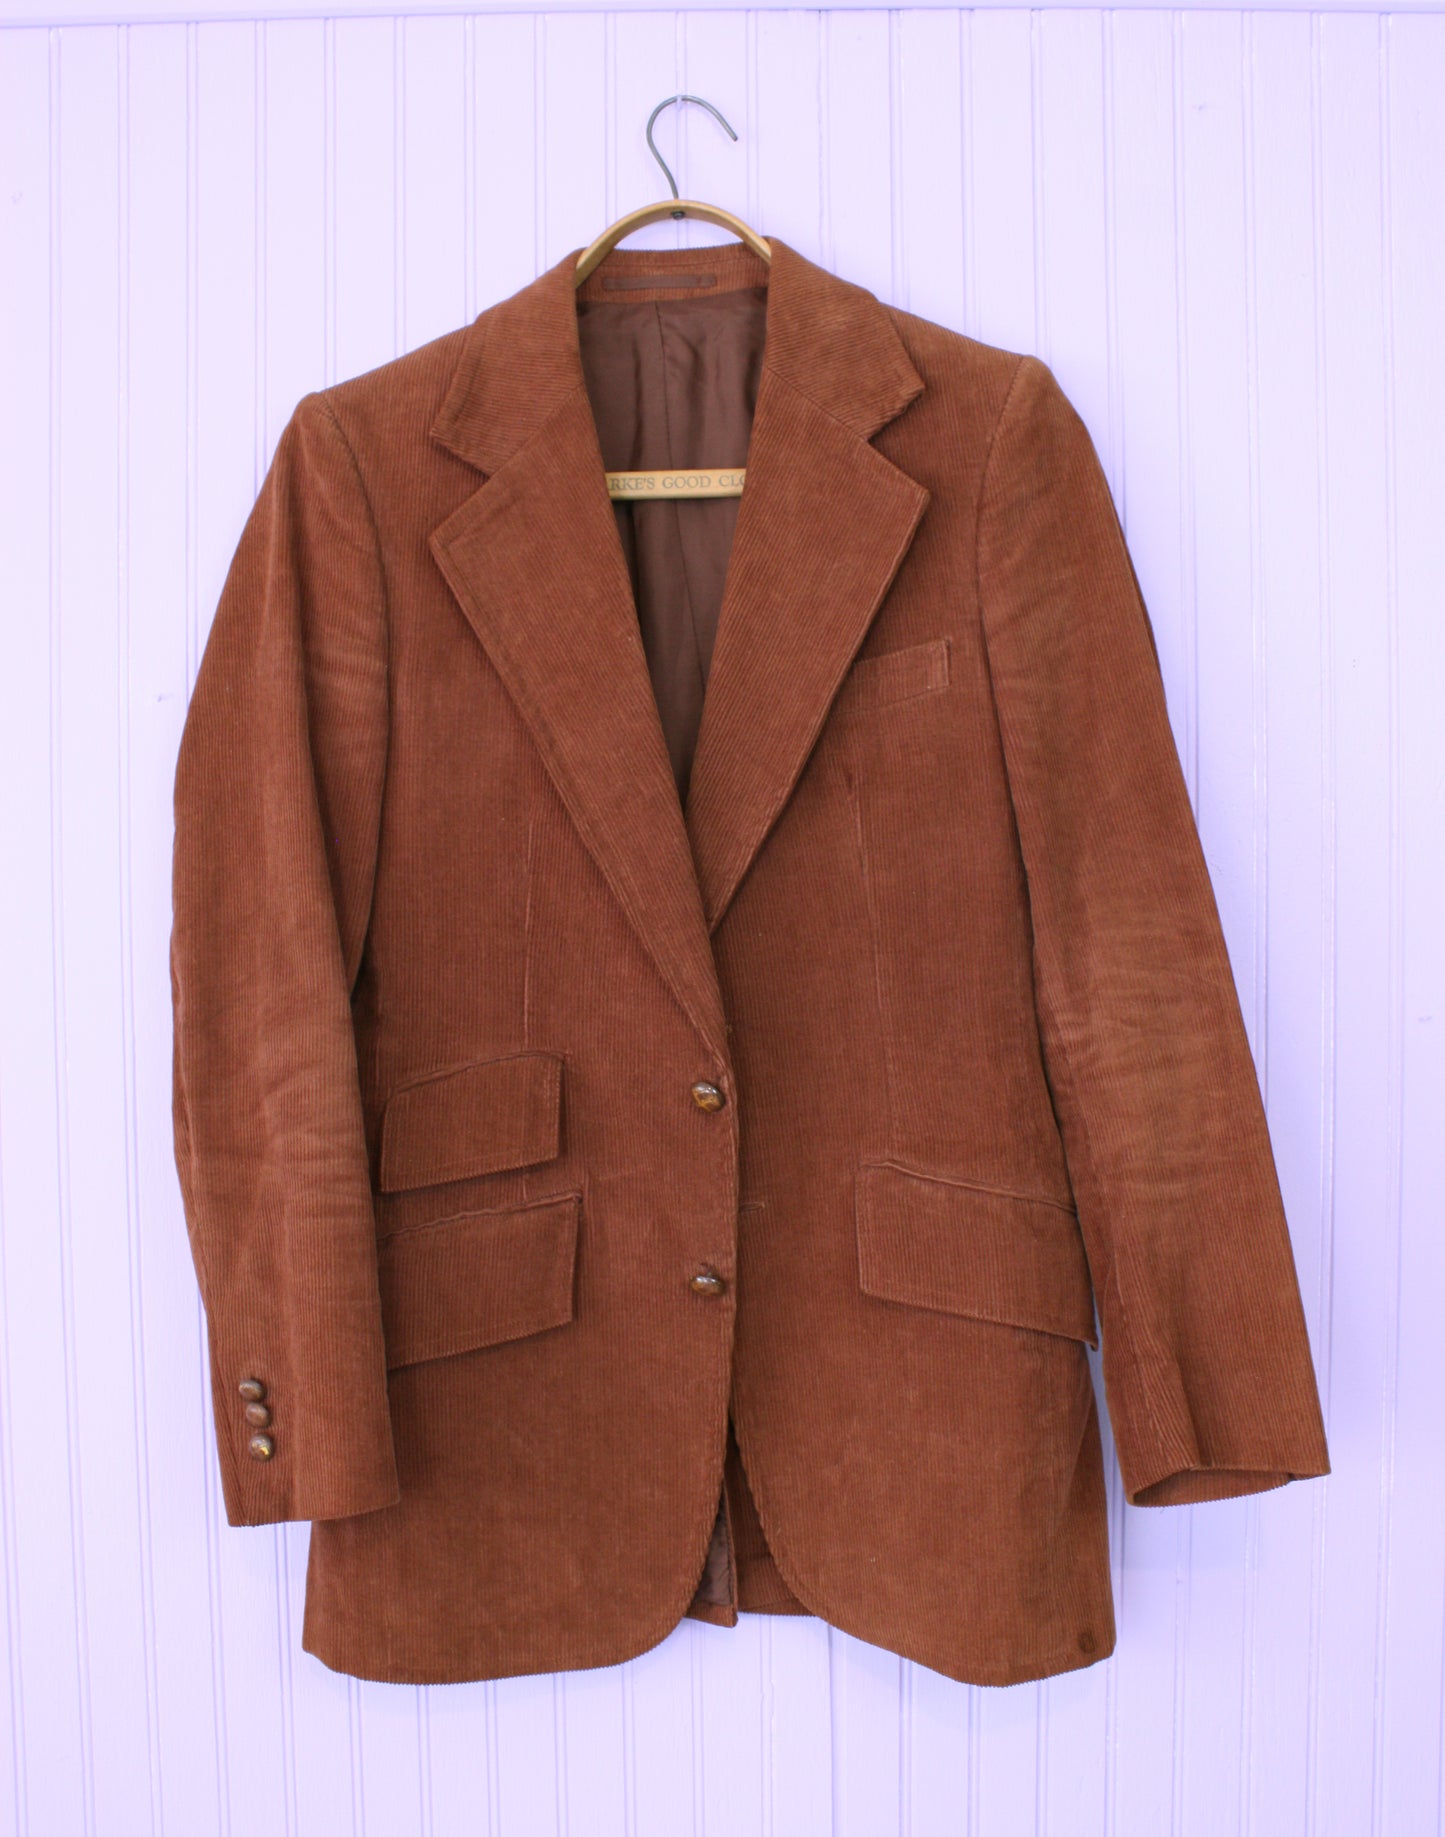 3 Piece 1970s Brown Corduroy Suit by Mercedes